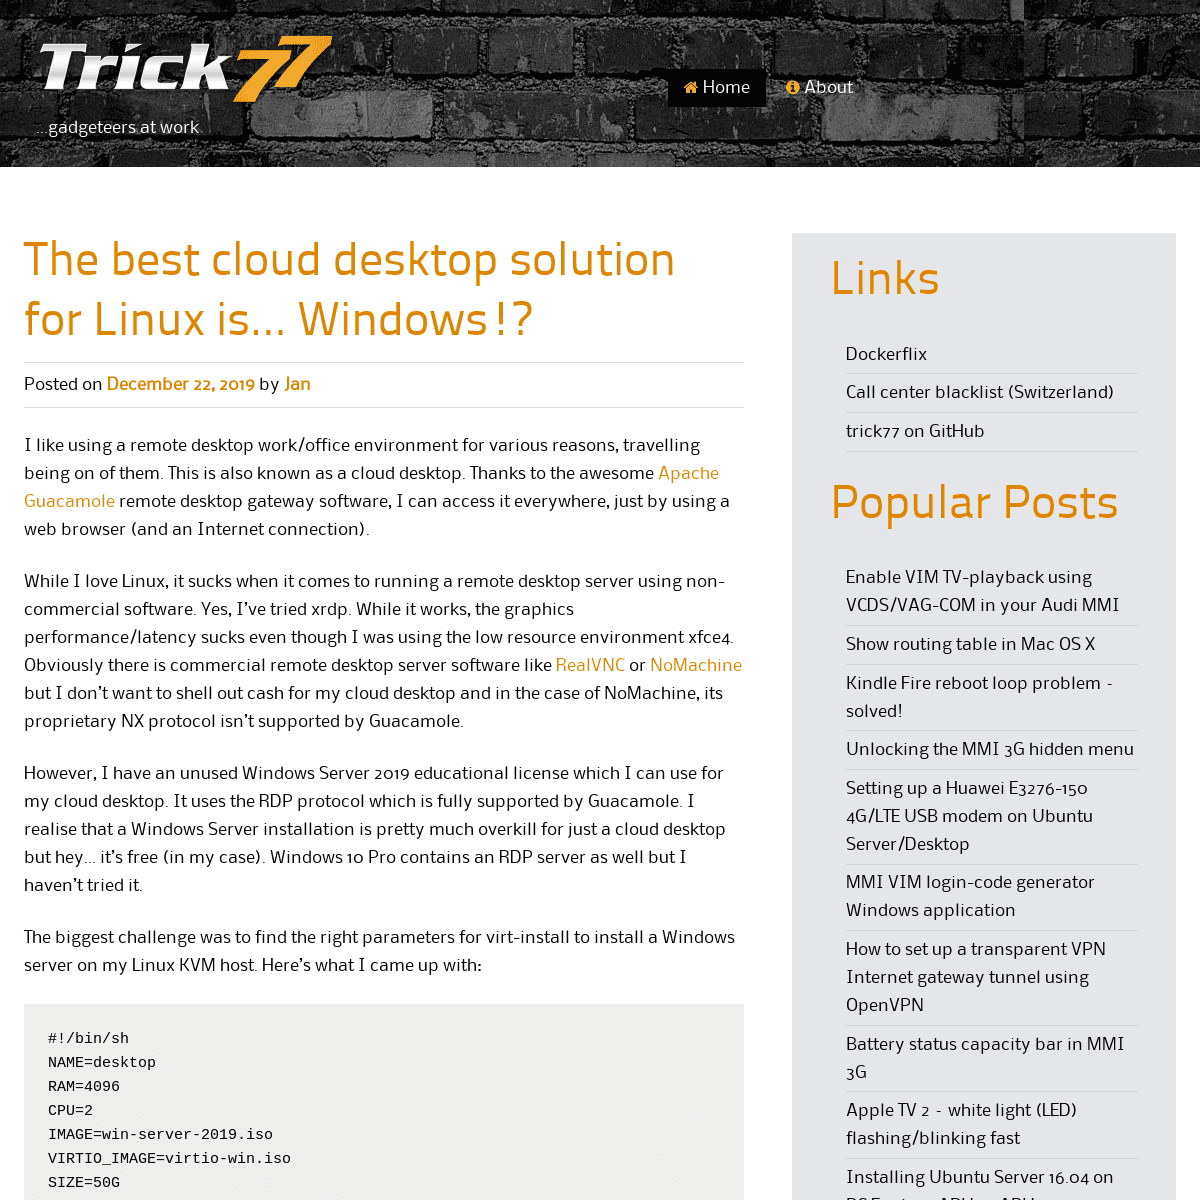 A complete backup of trick77.com